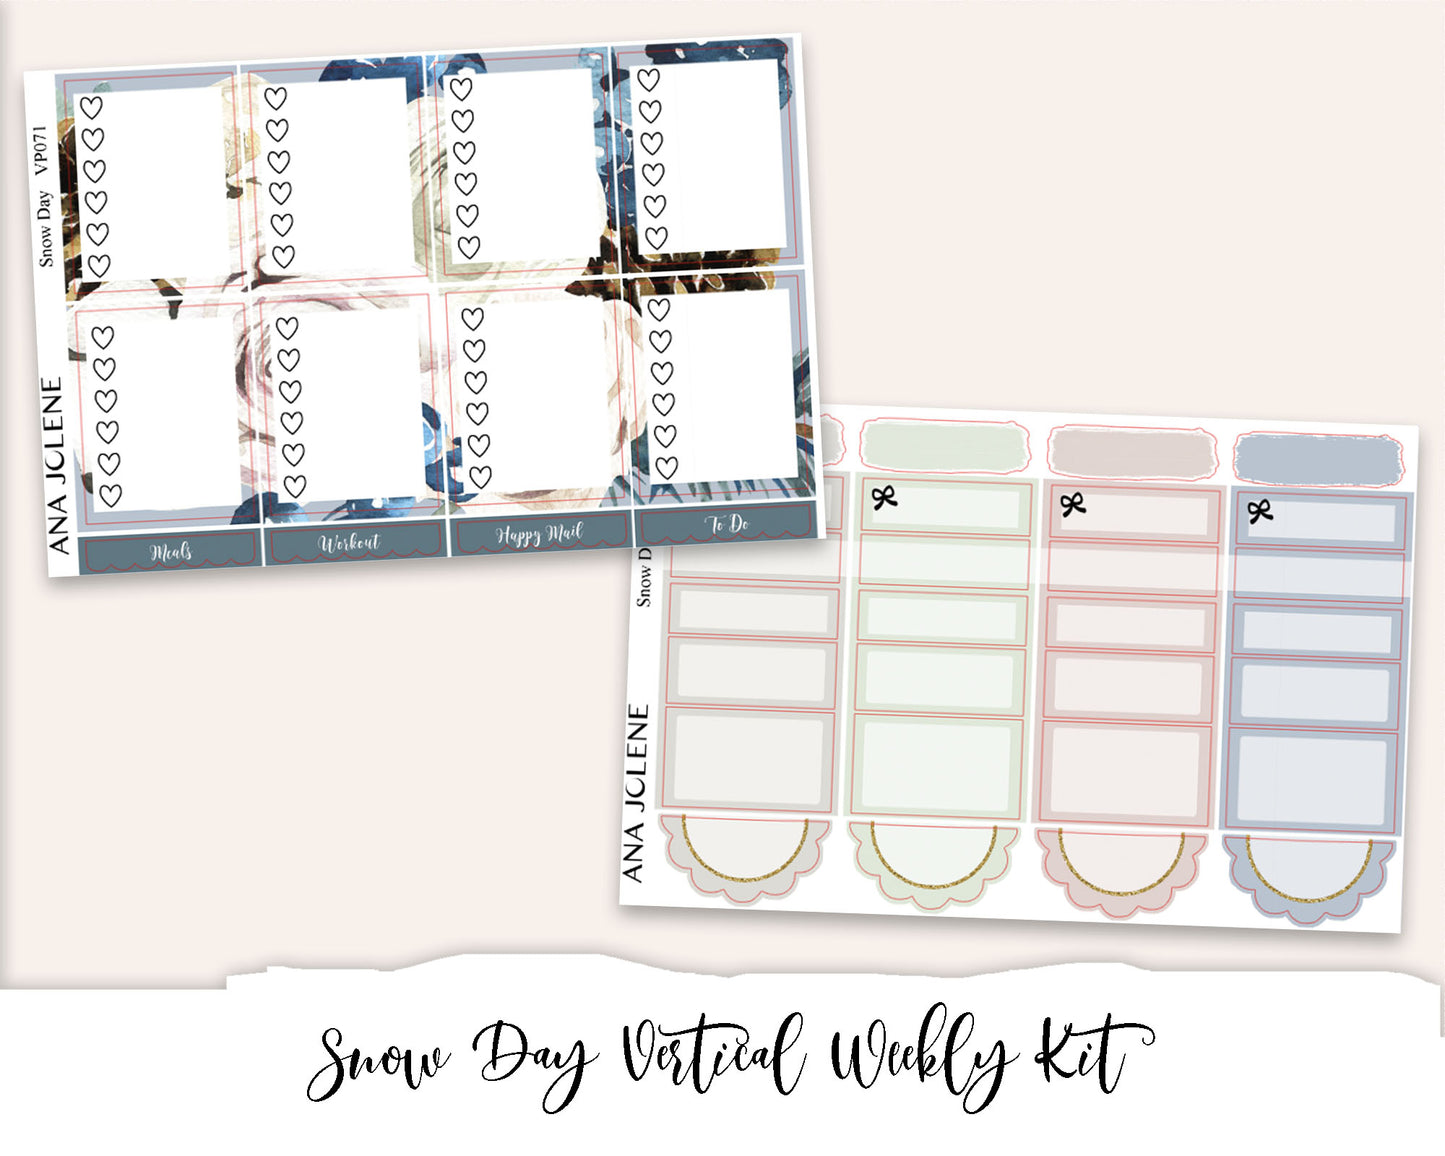 SNOW DAY Planner Sticker Kit (Vertical Weekly)